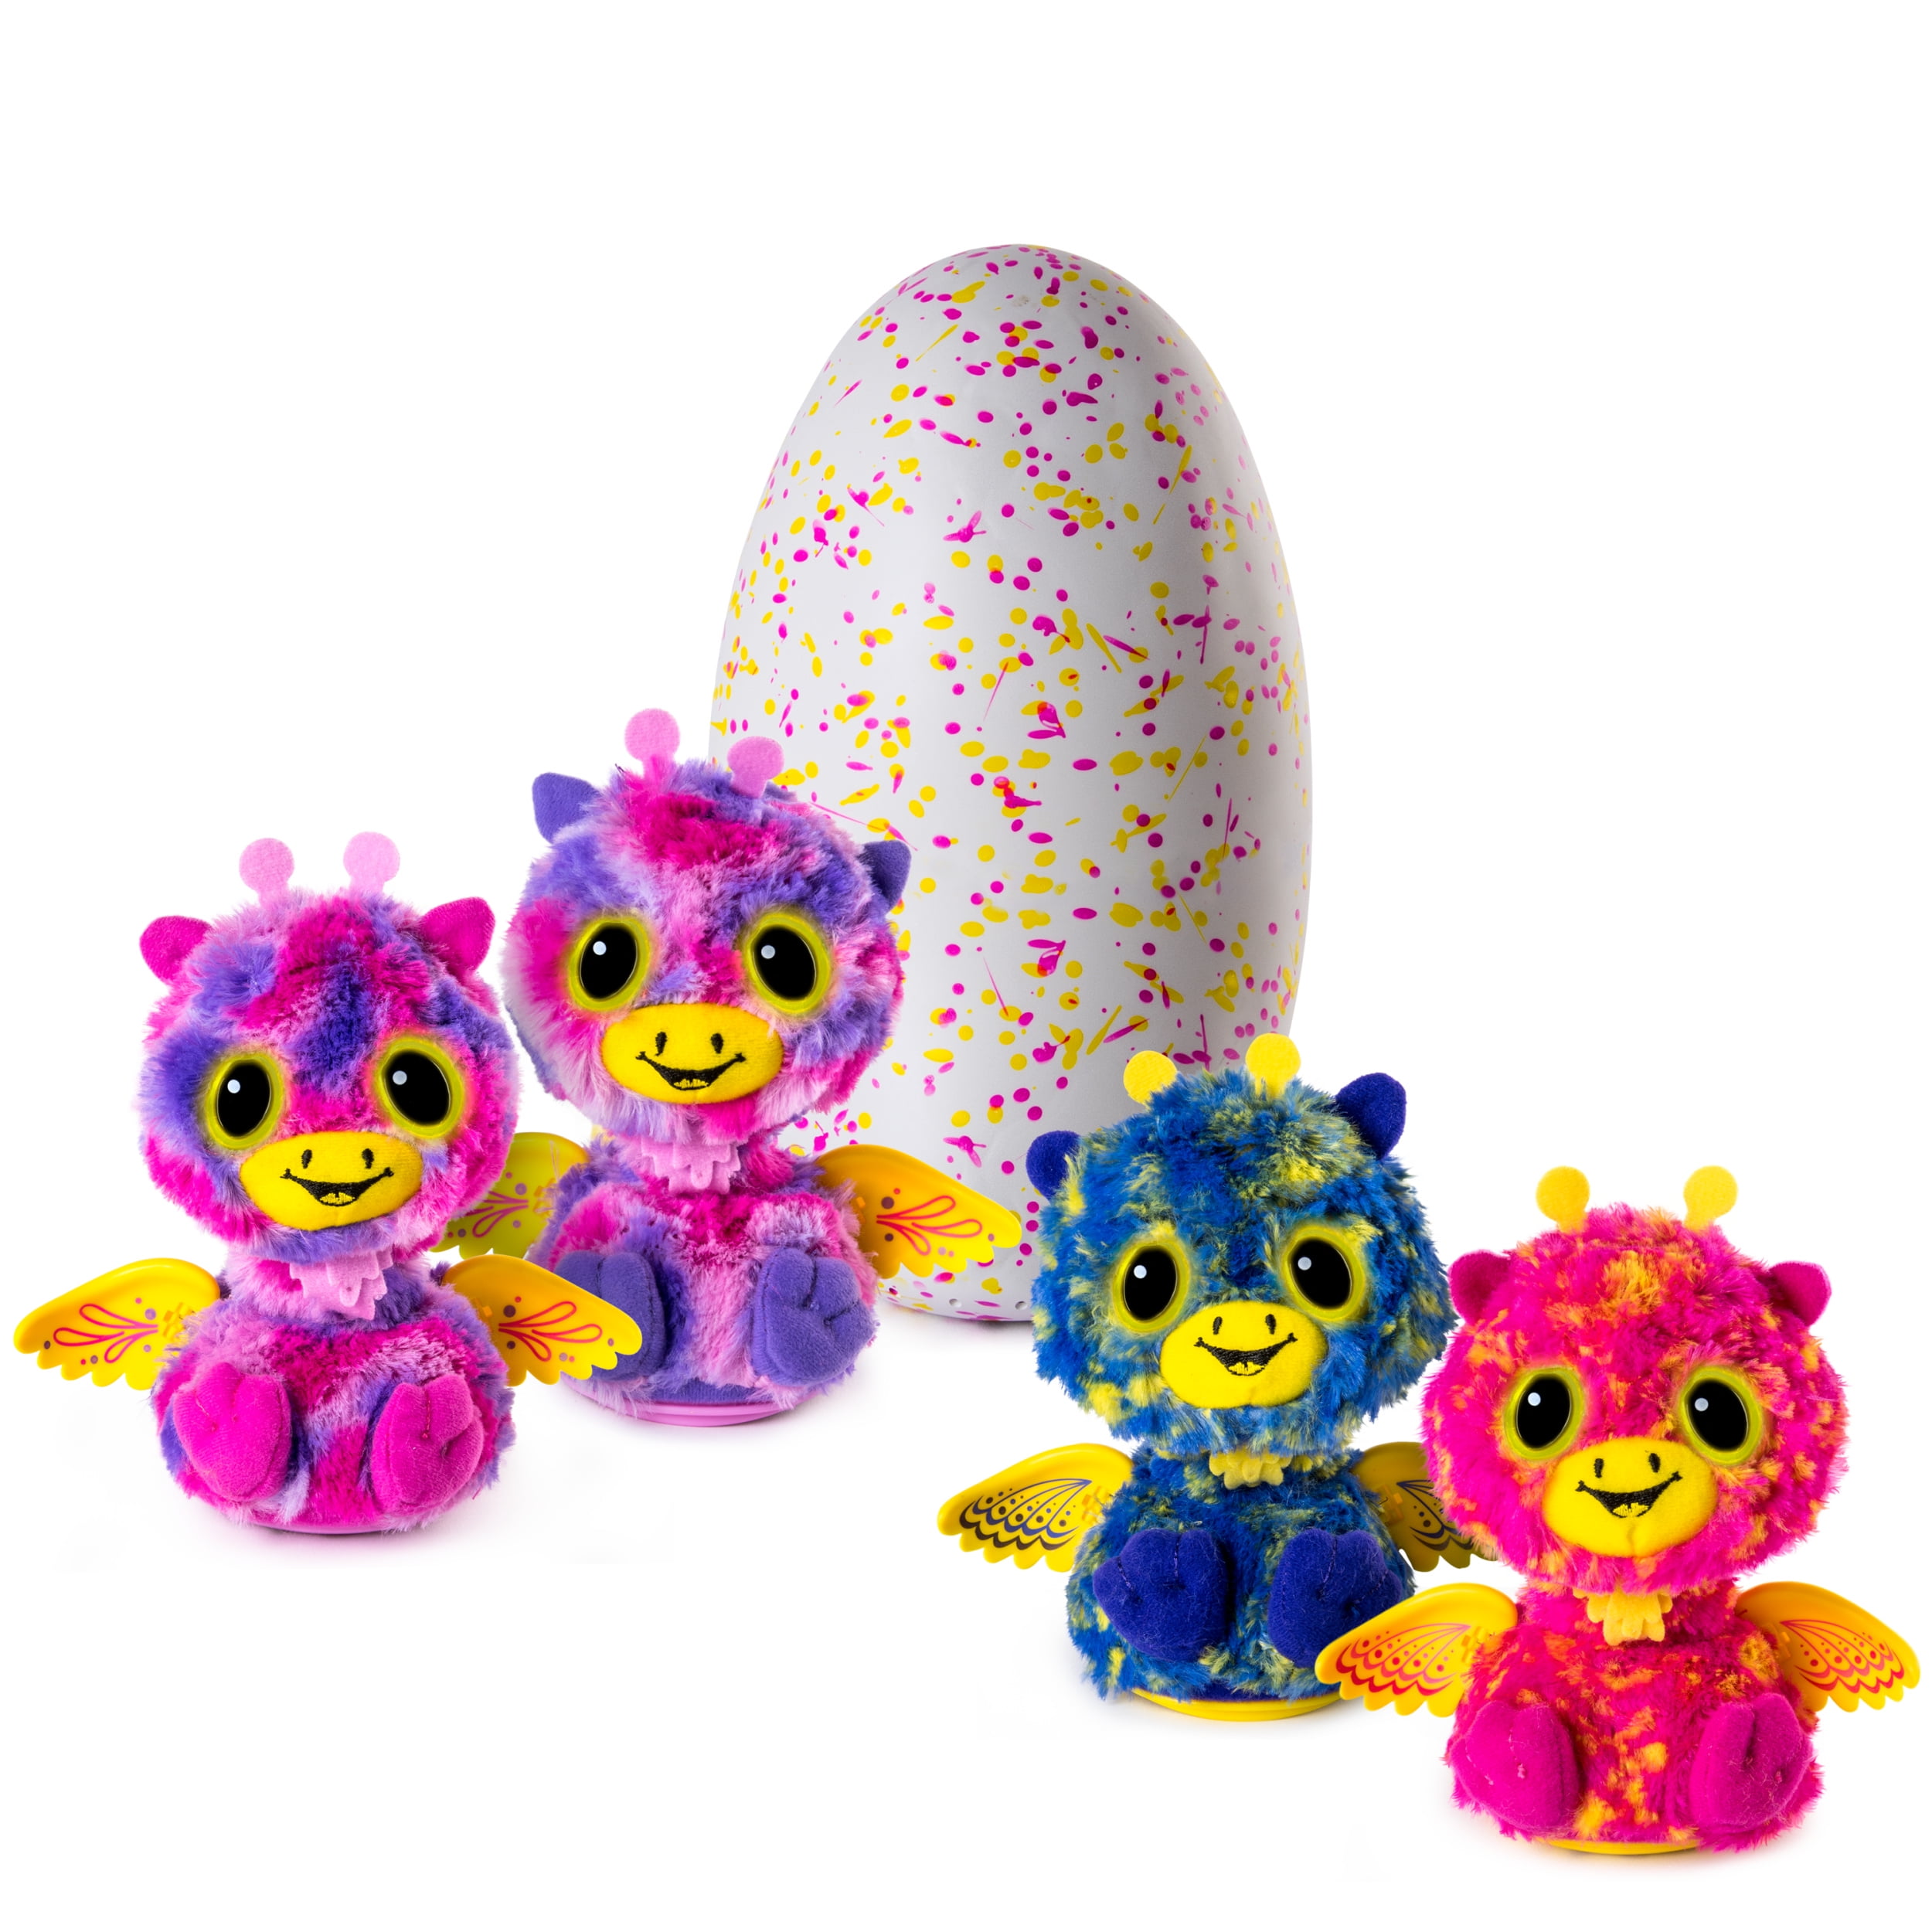 Hatchimal Colleggtibles Egg Hatchery Nursery Toy Figures Playset Kids Xmas Gift 